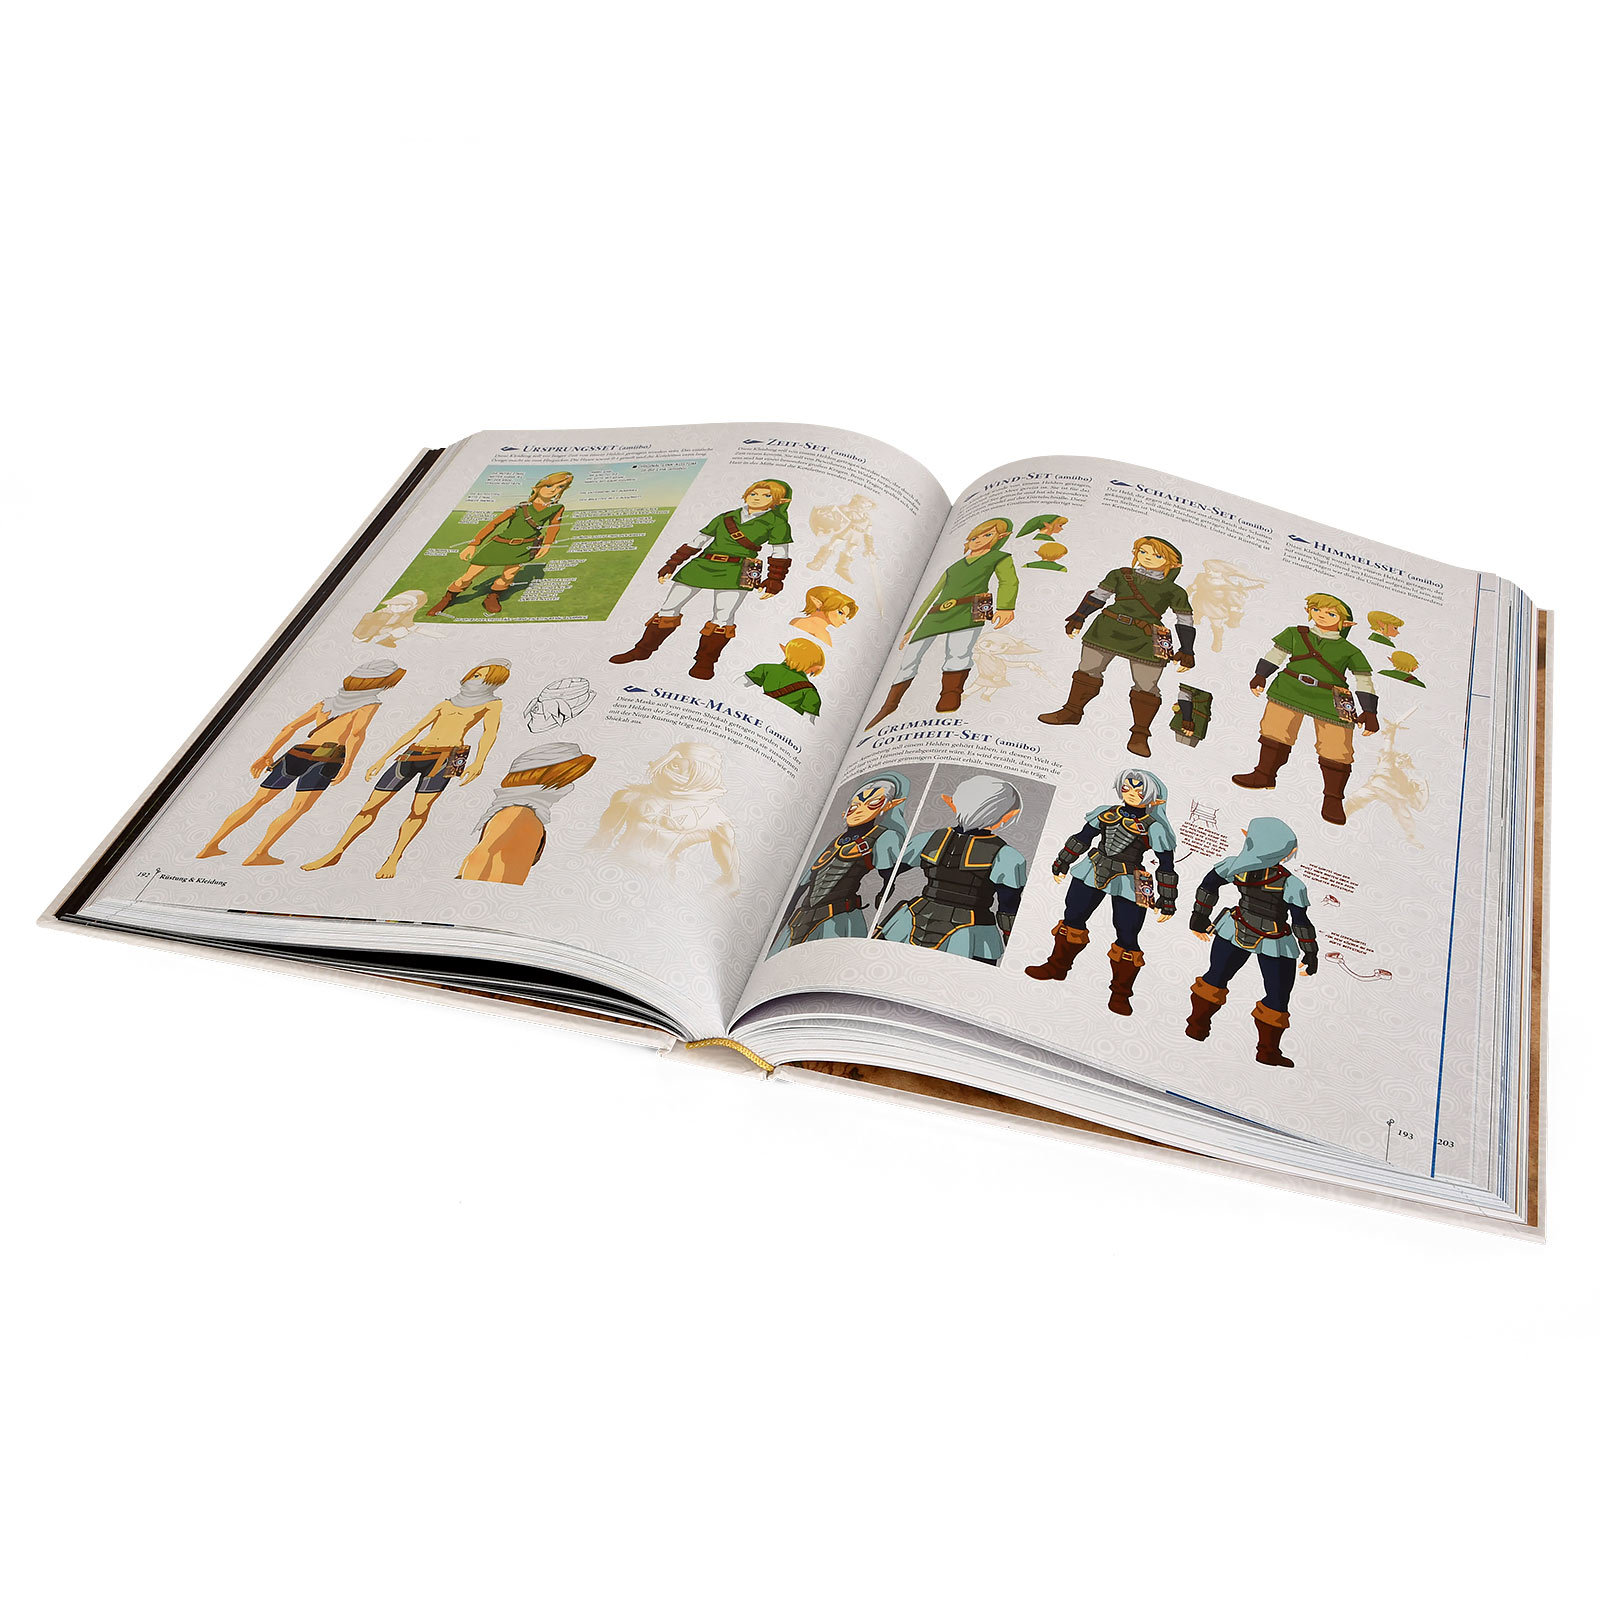 The Legend of Zelda - Breath of the Wild Artbook